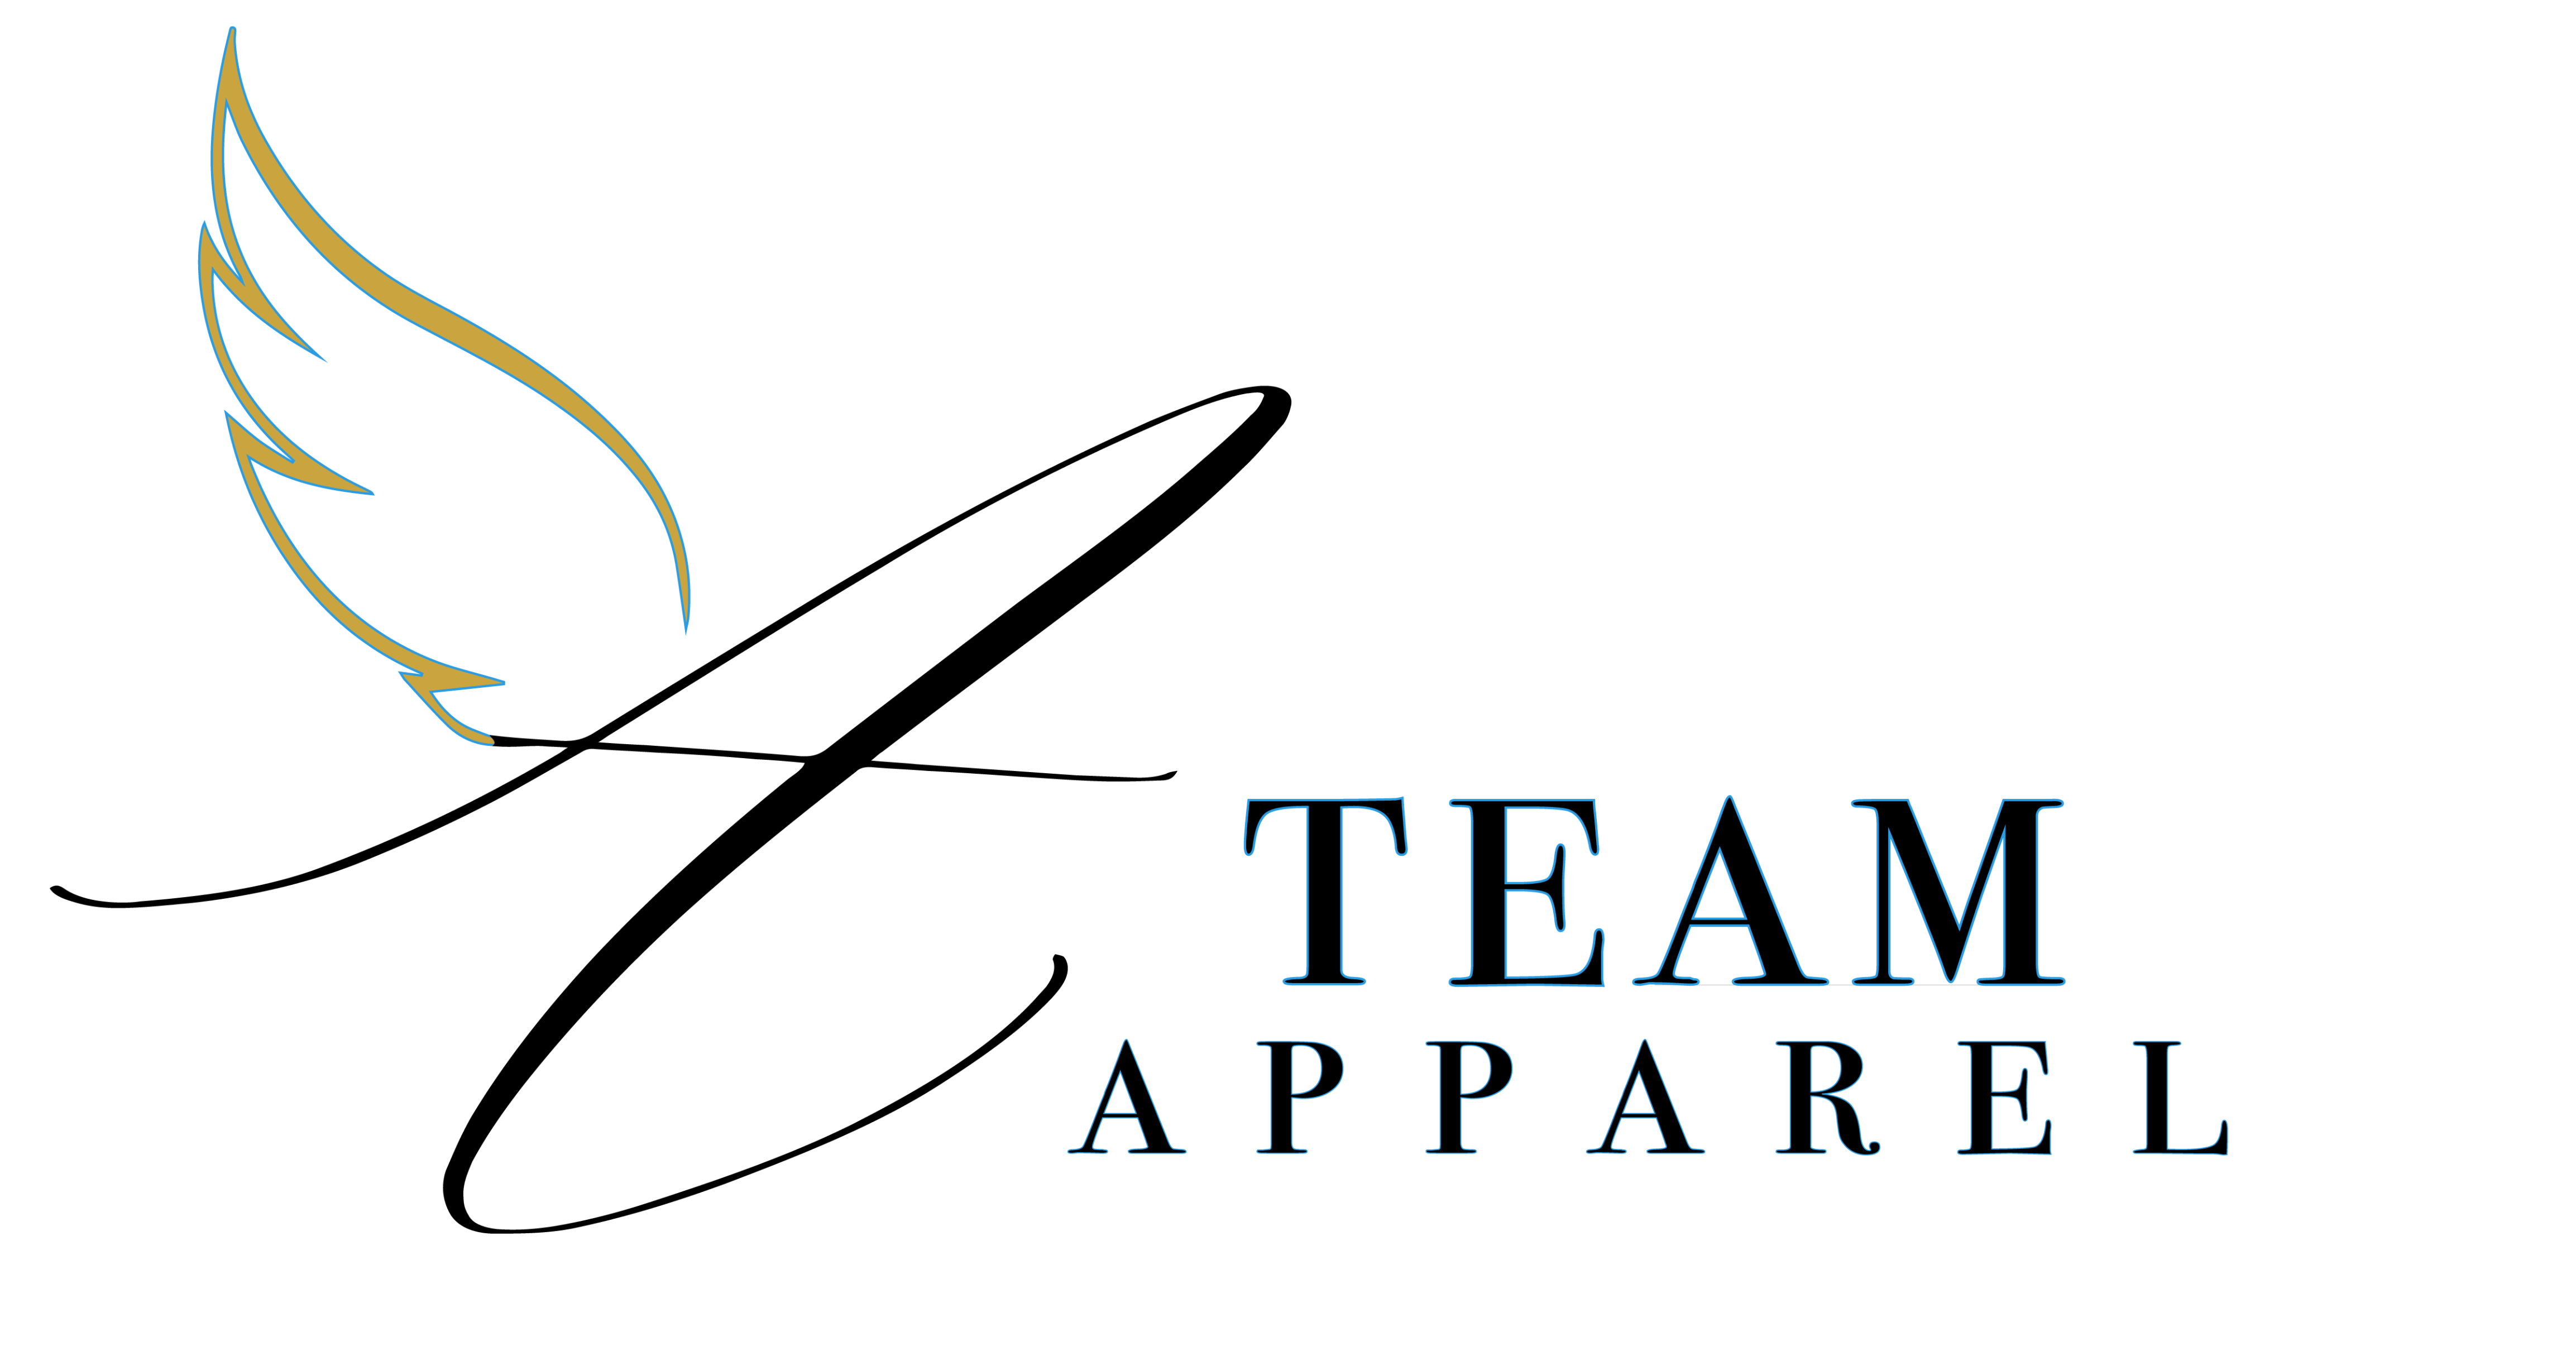 A-Team Apparel